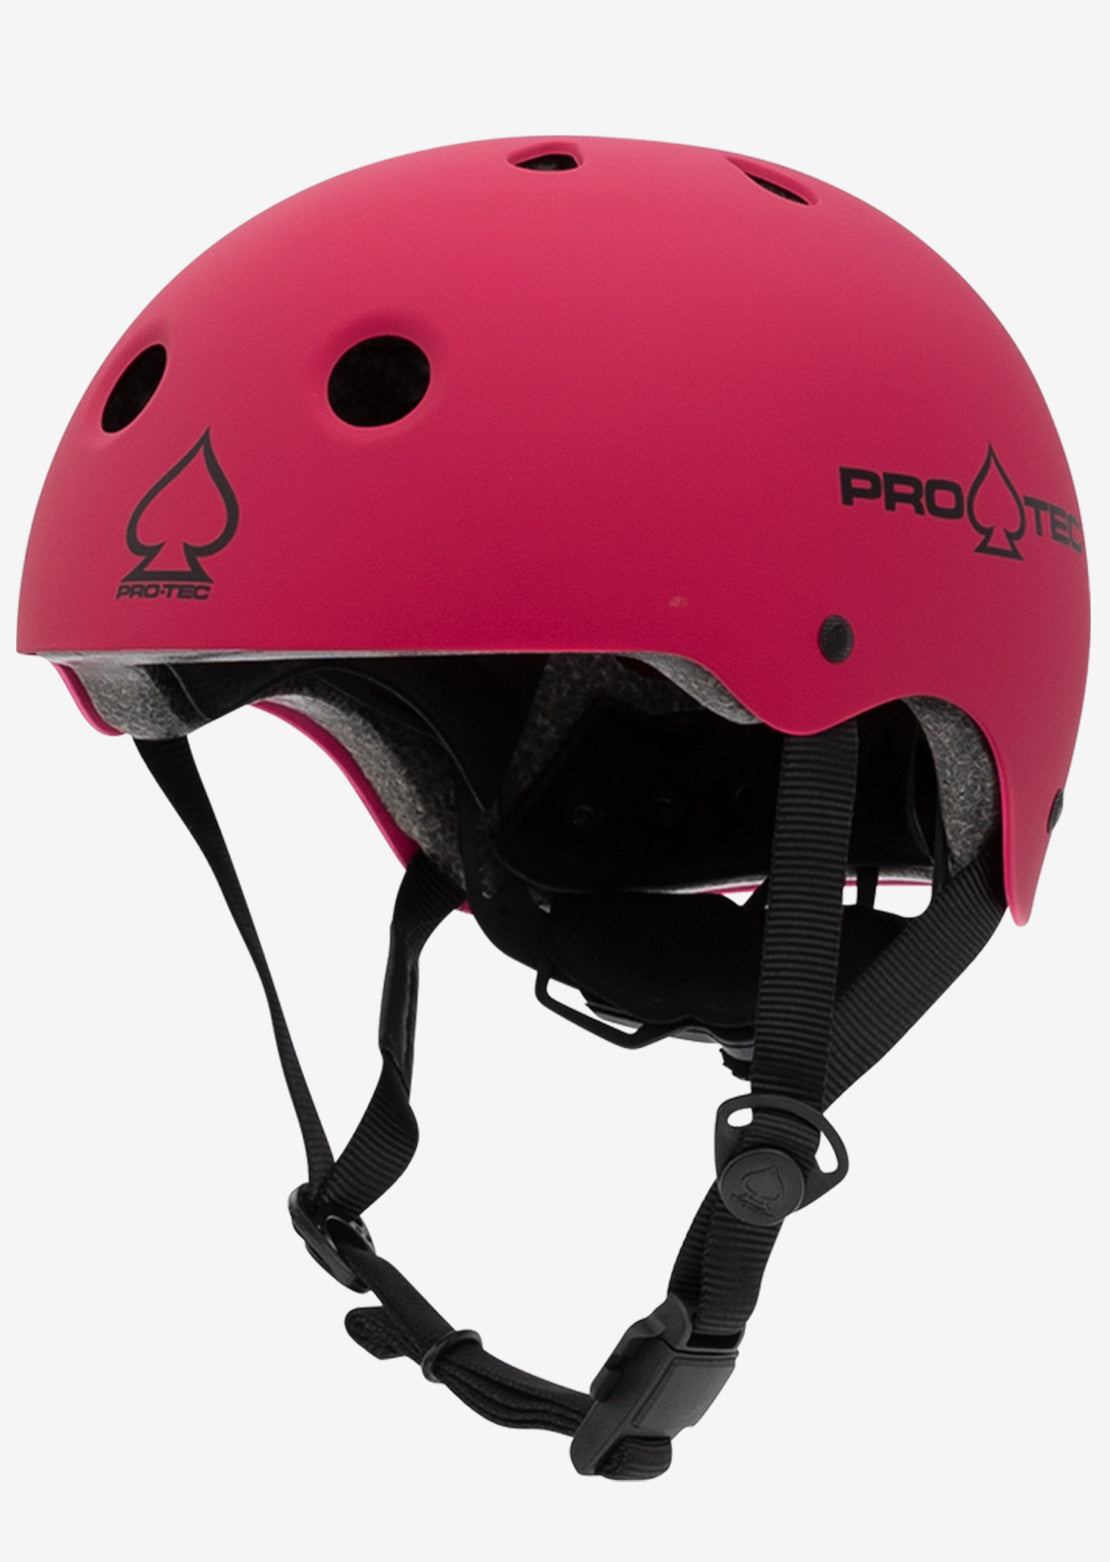 Pro-Tec Junior Classic Fit Certified Skateboard Helmet